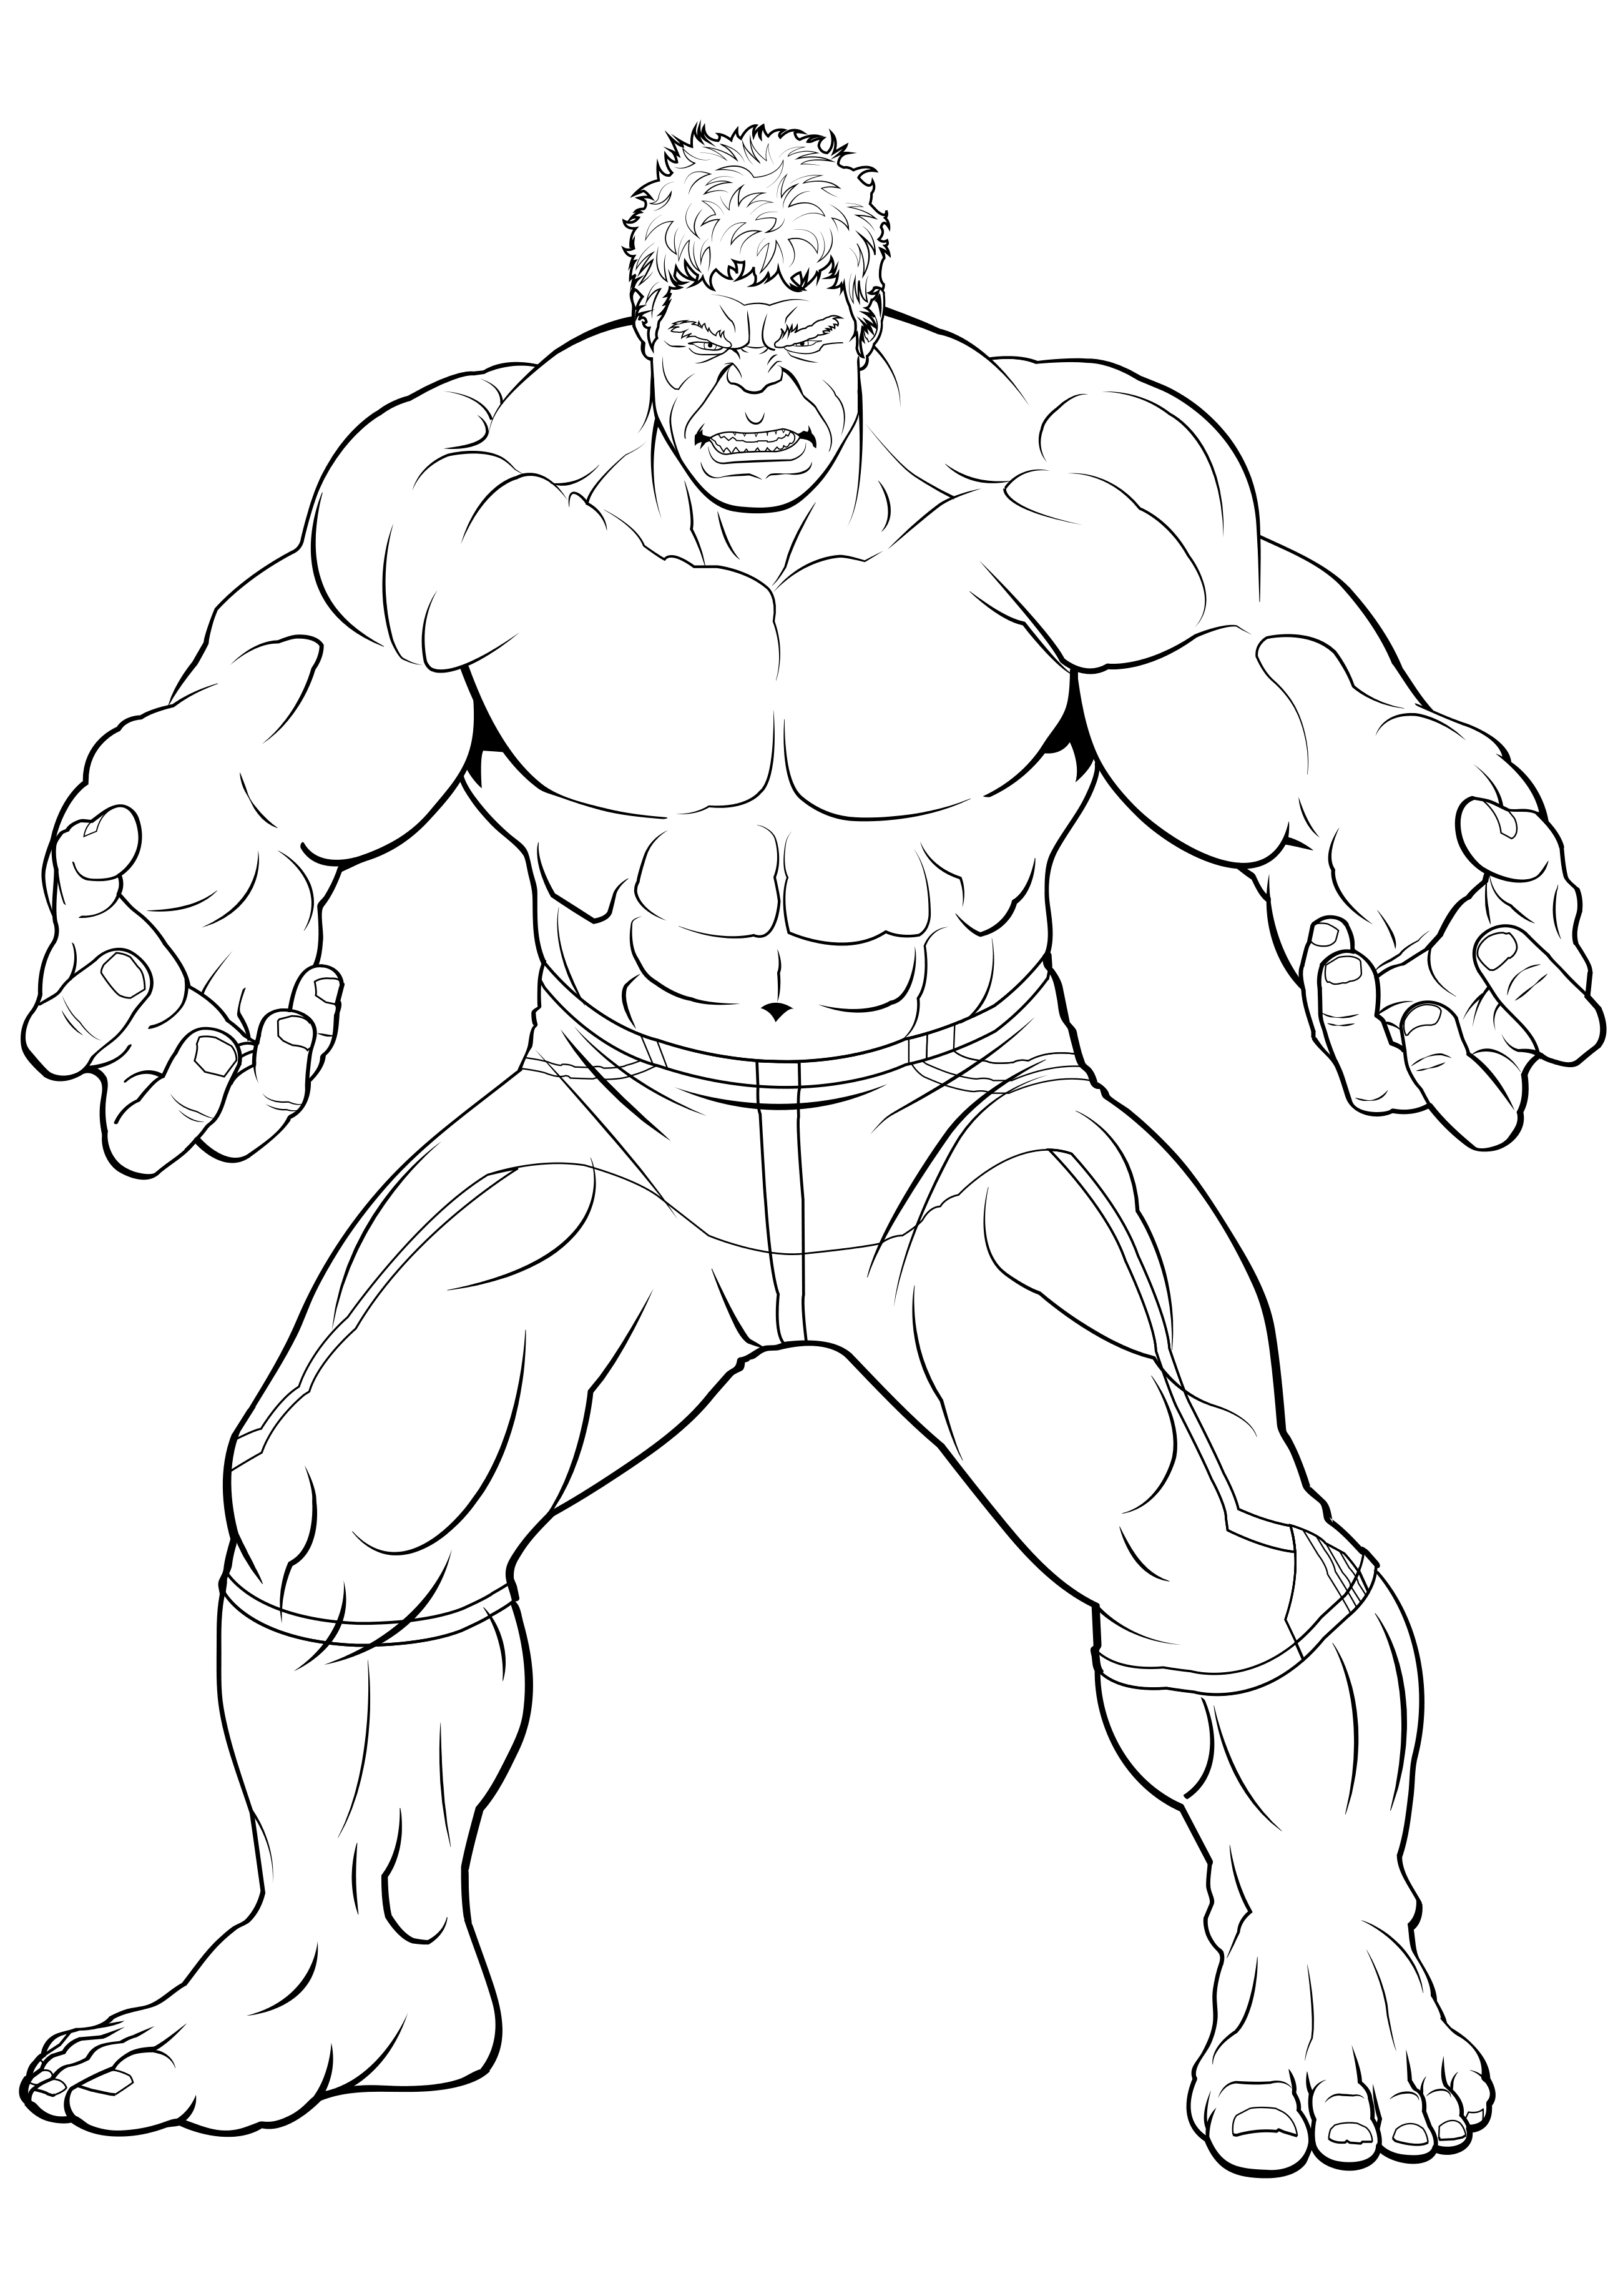 Para Colorear de Hulk - Imprimir